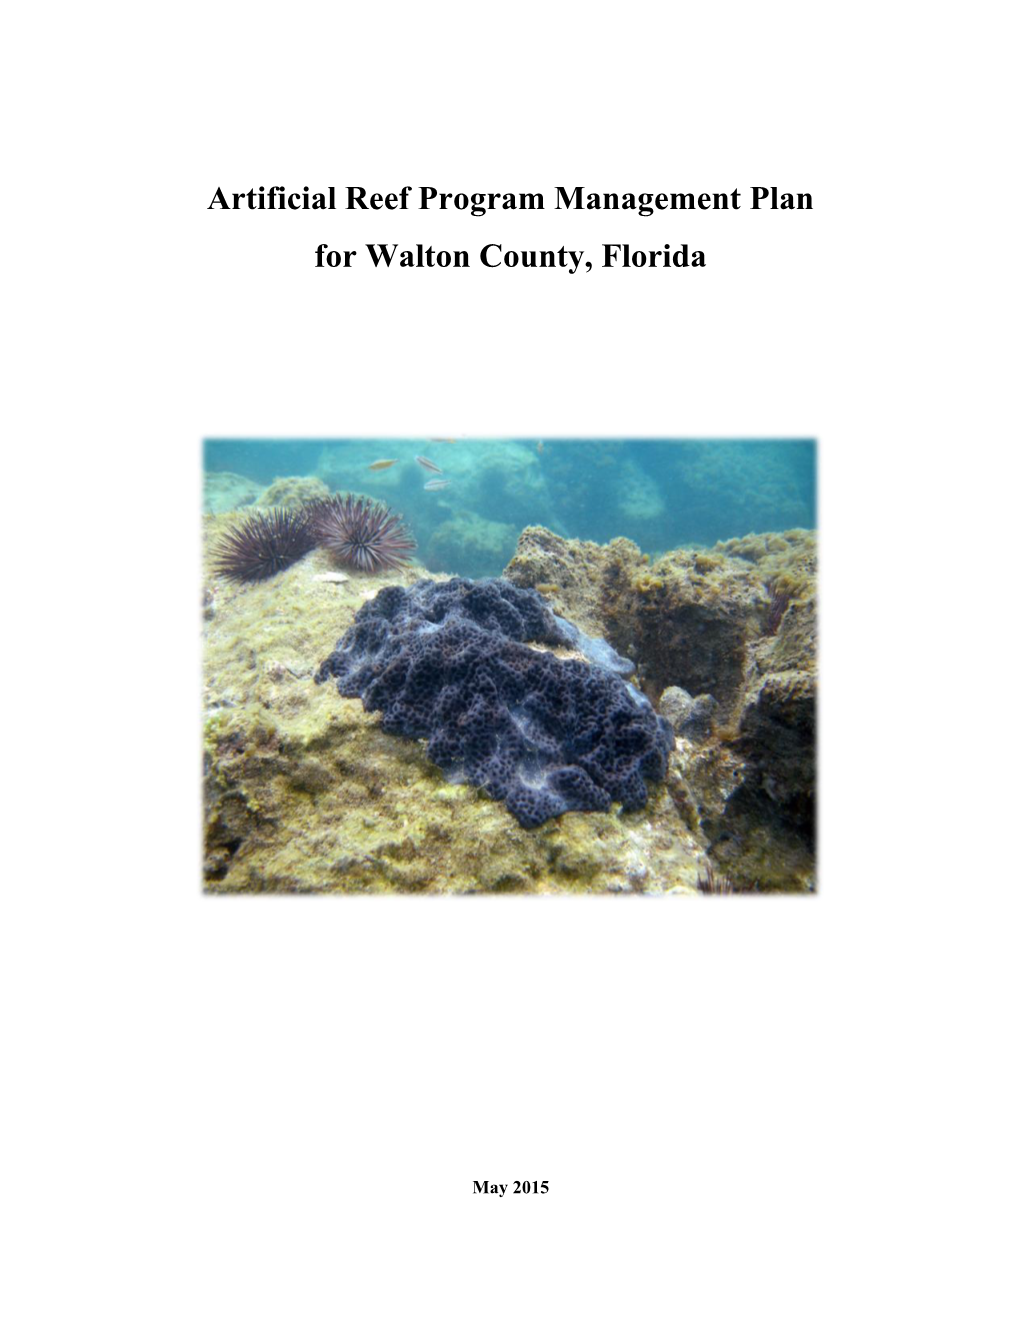 Artificial Reef Program Management Plan for Walton County, Florida